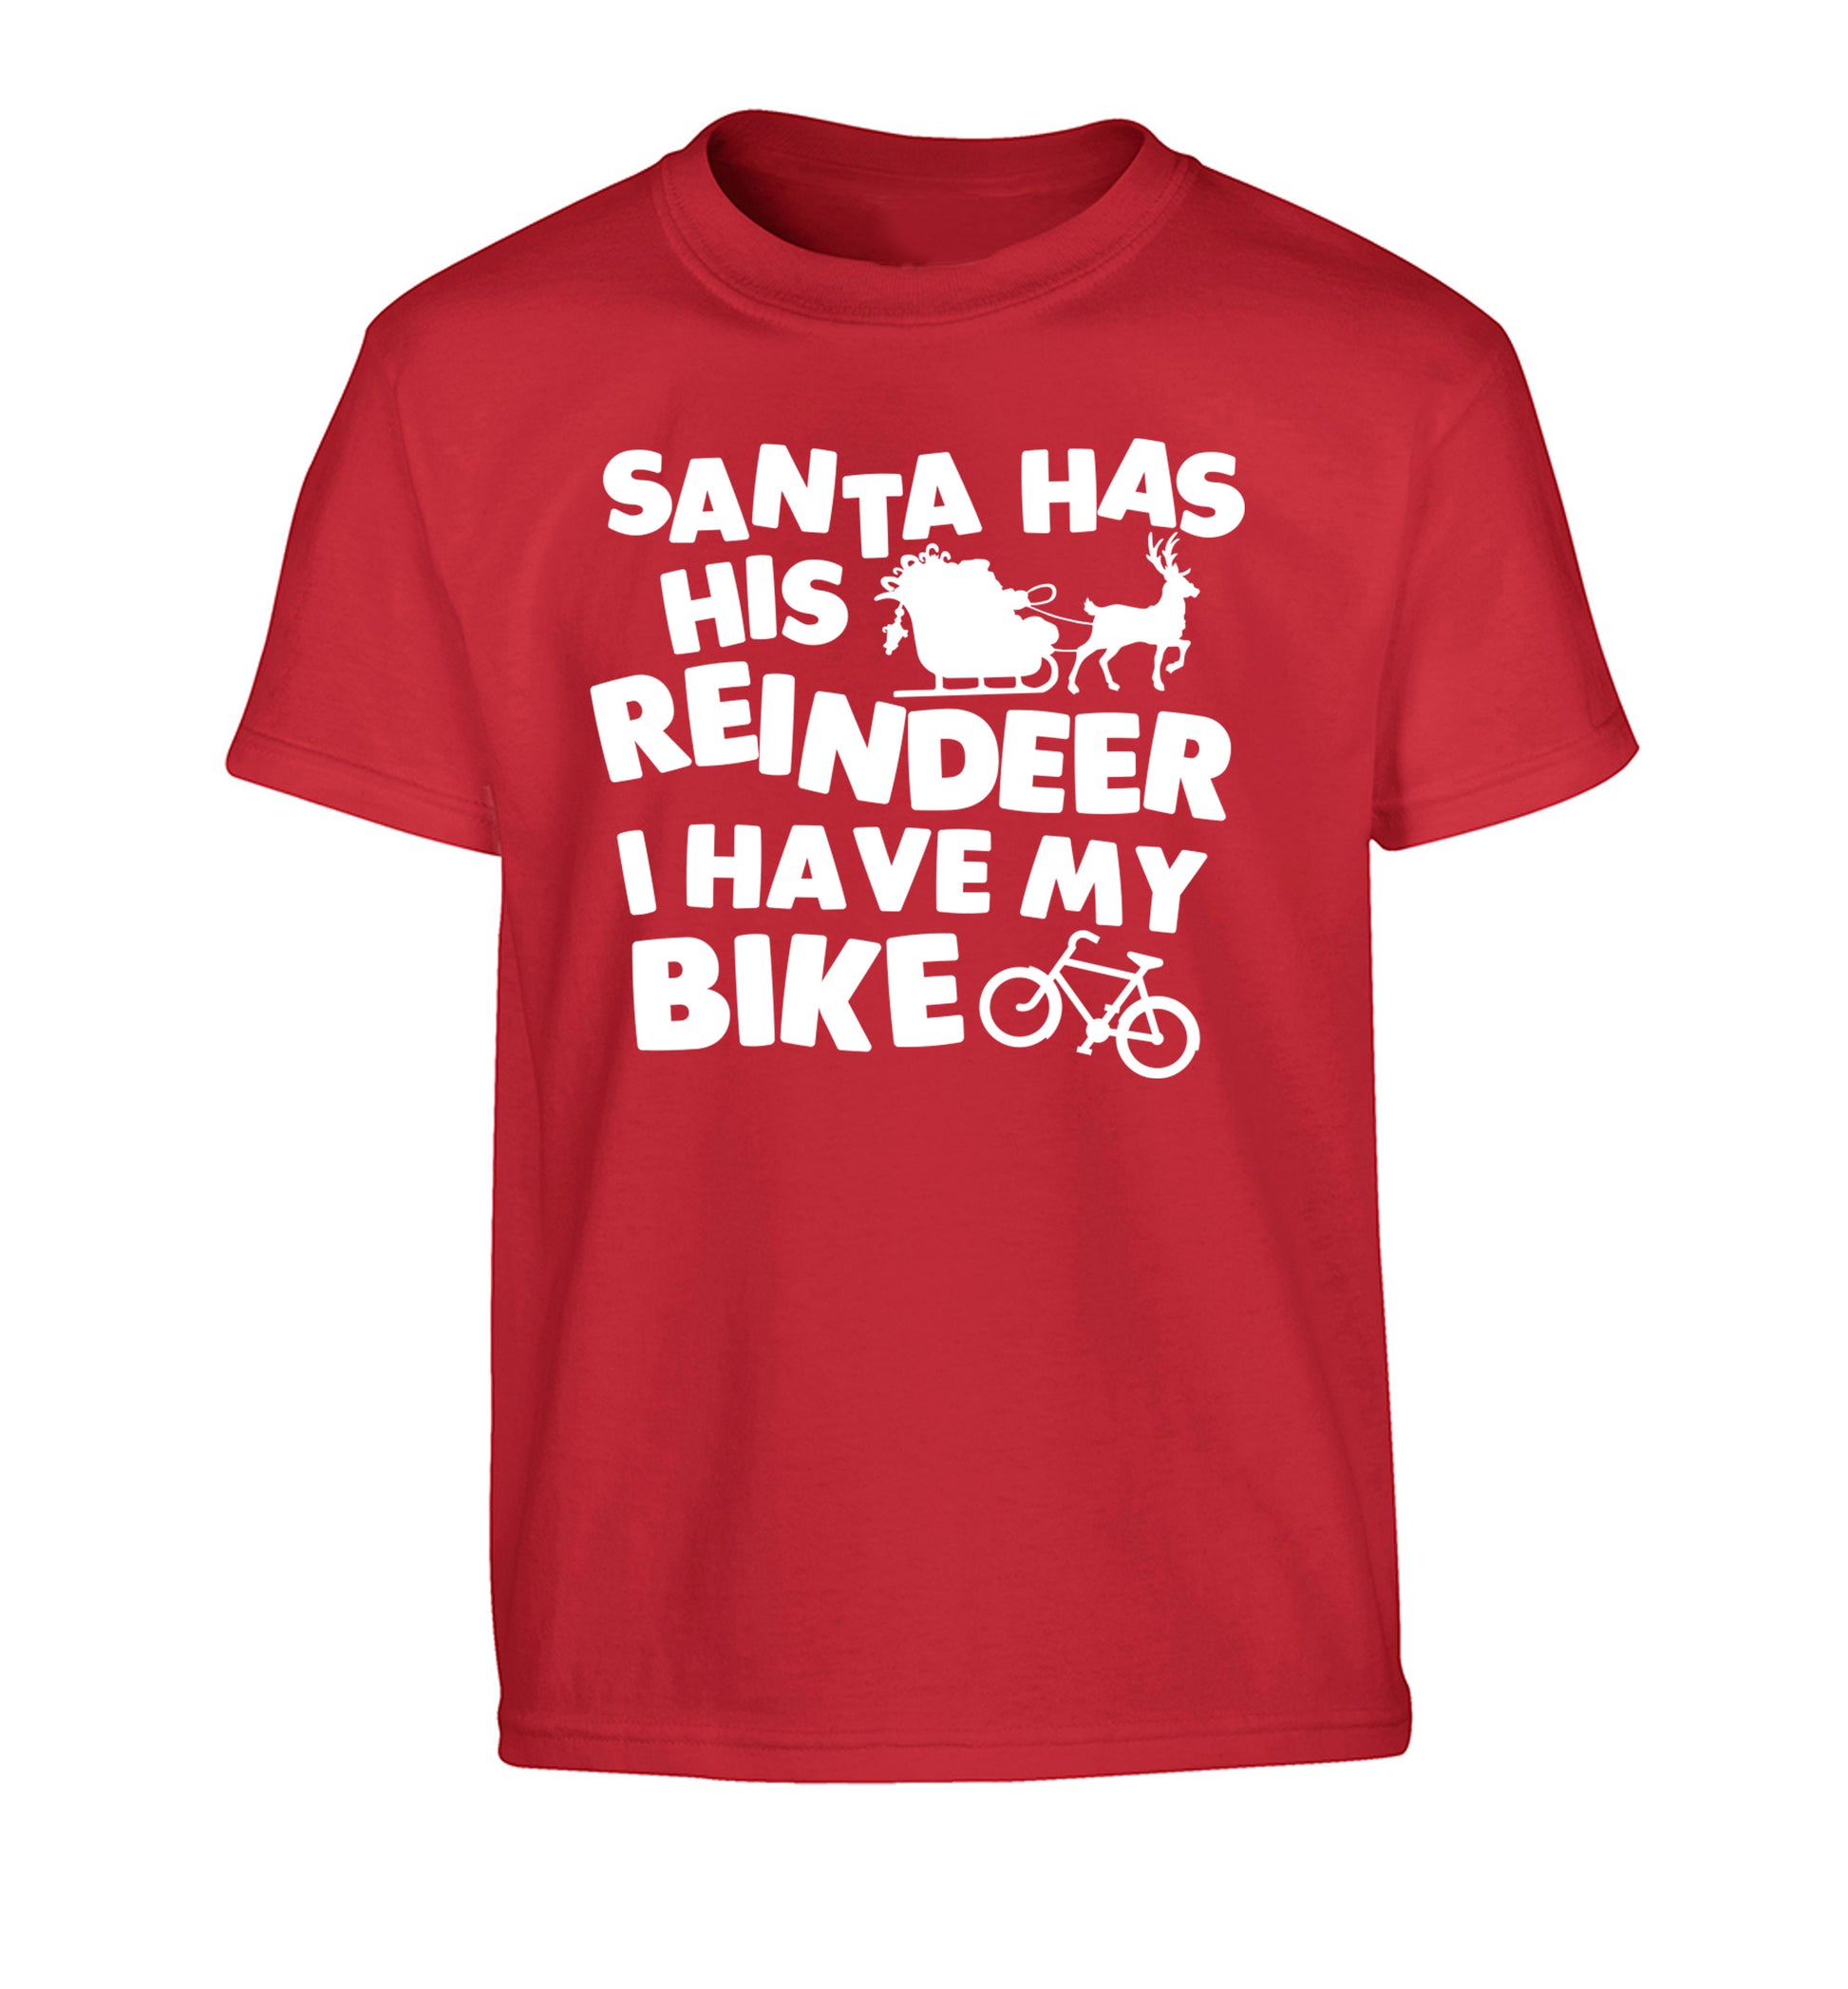 Santa has his reindeer I have my bike Children's red Tshirt 12-14 Years